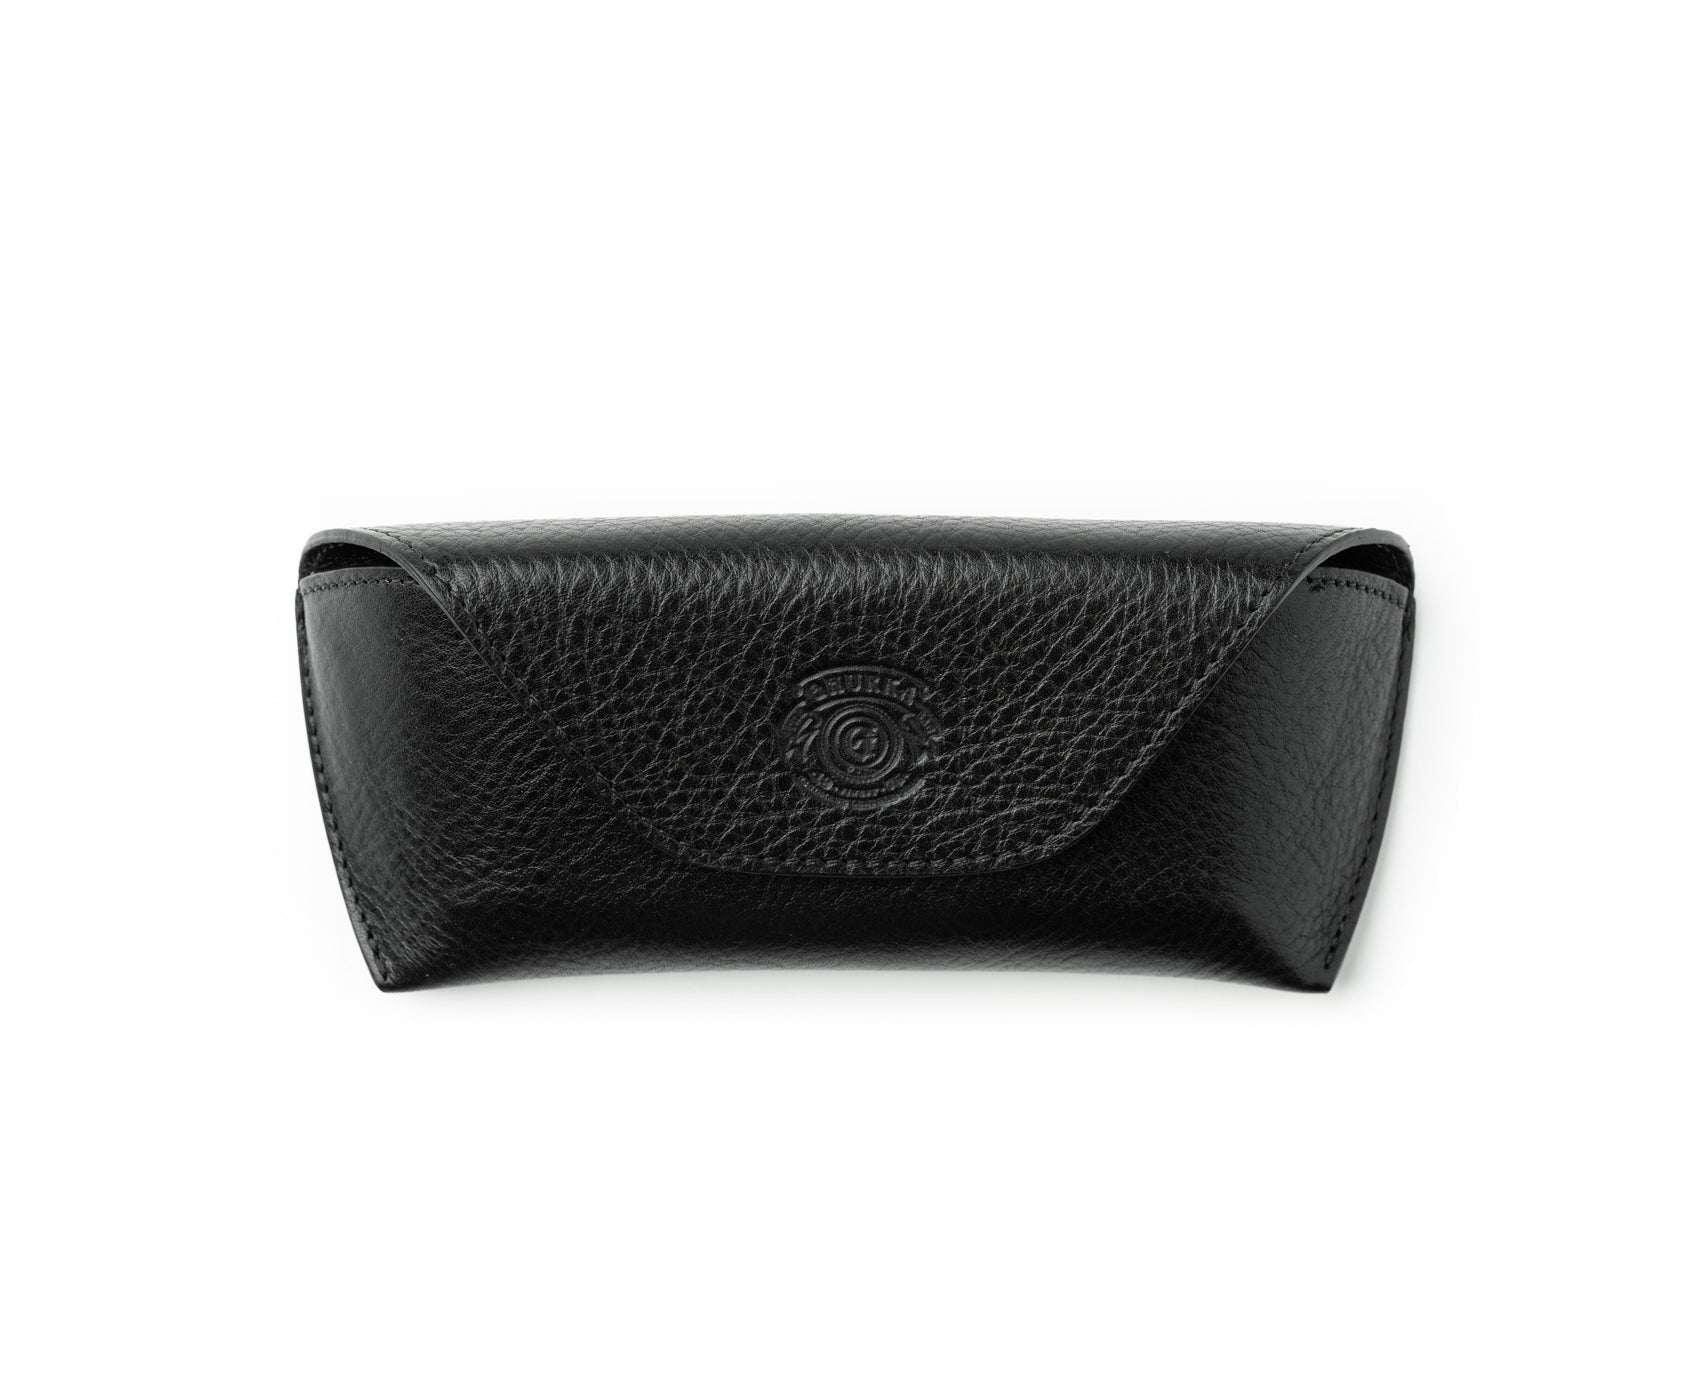 Hard Sunglass Case No. 251 | Vintage Black Leather